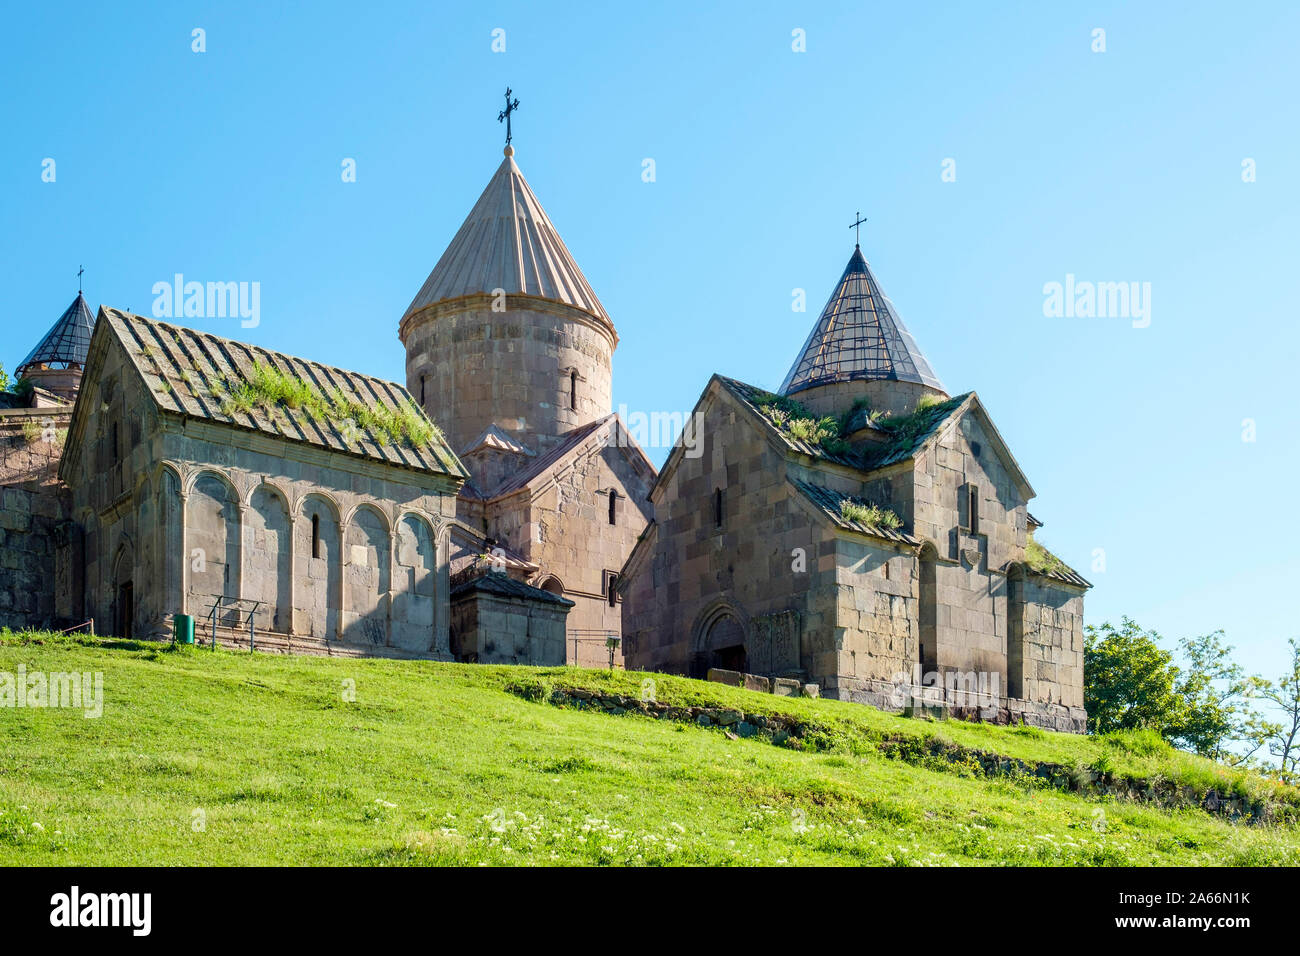 Goshavank Monastery complex, Gosh, Tavush Province, Armenia Stock Photo